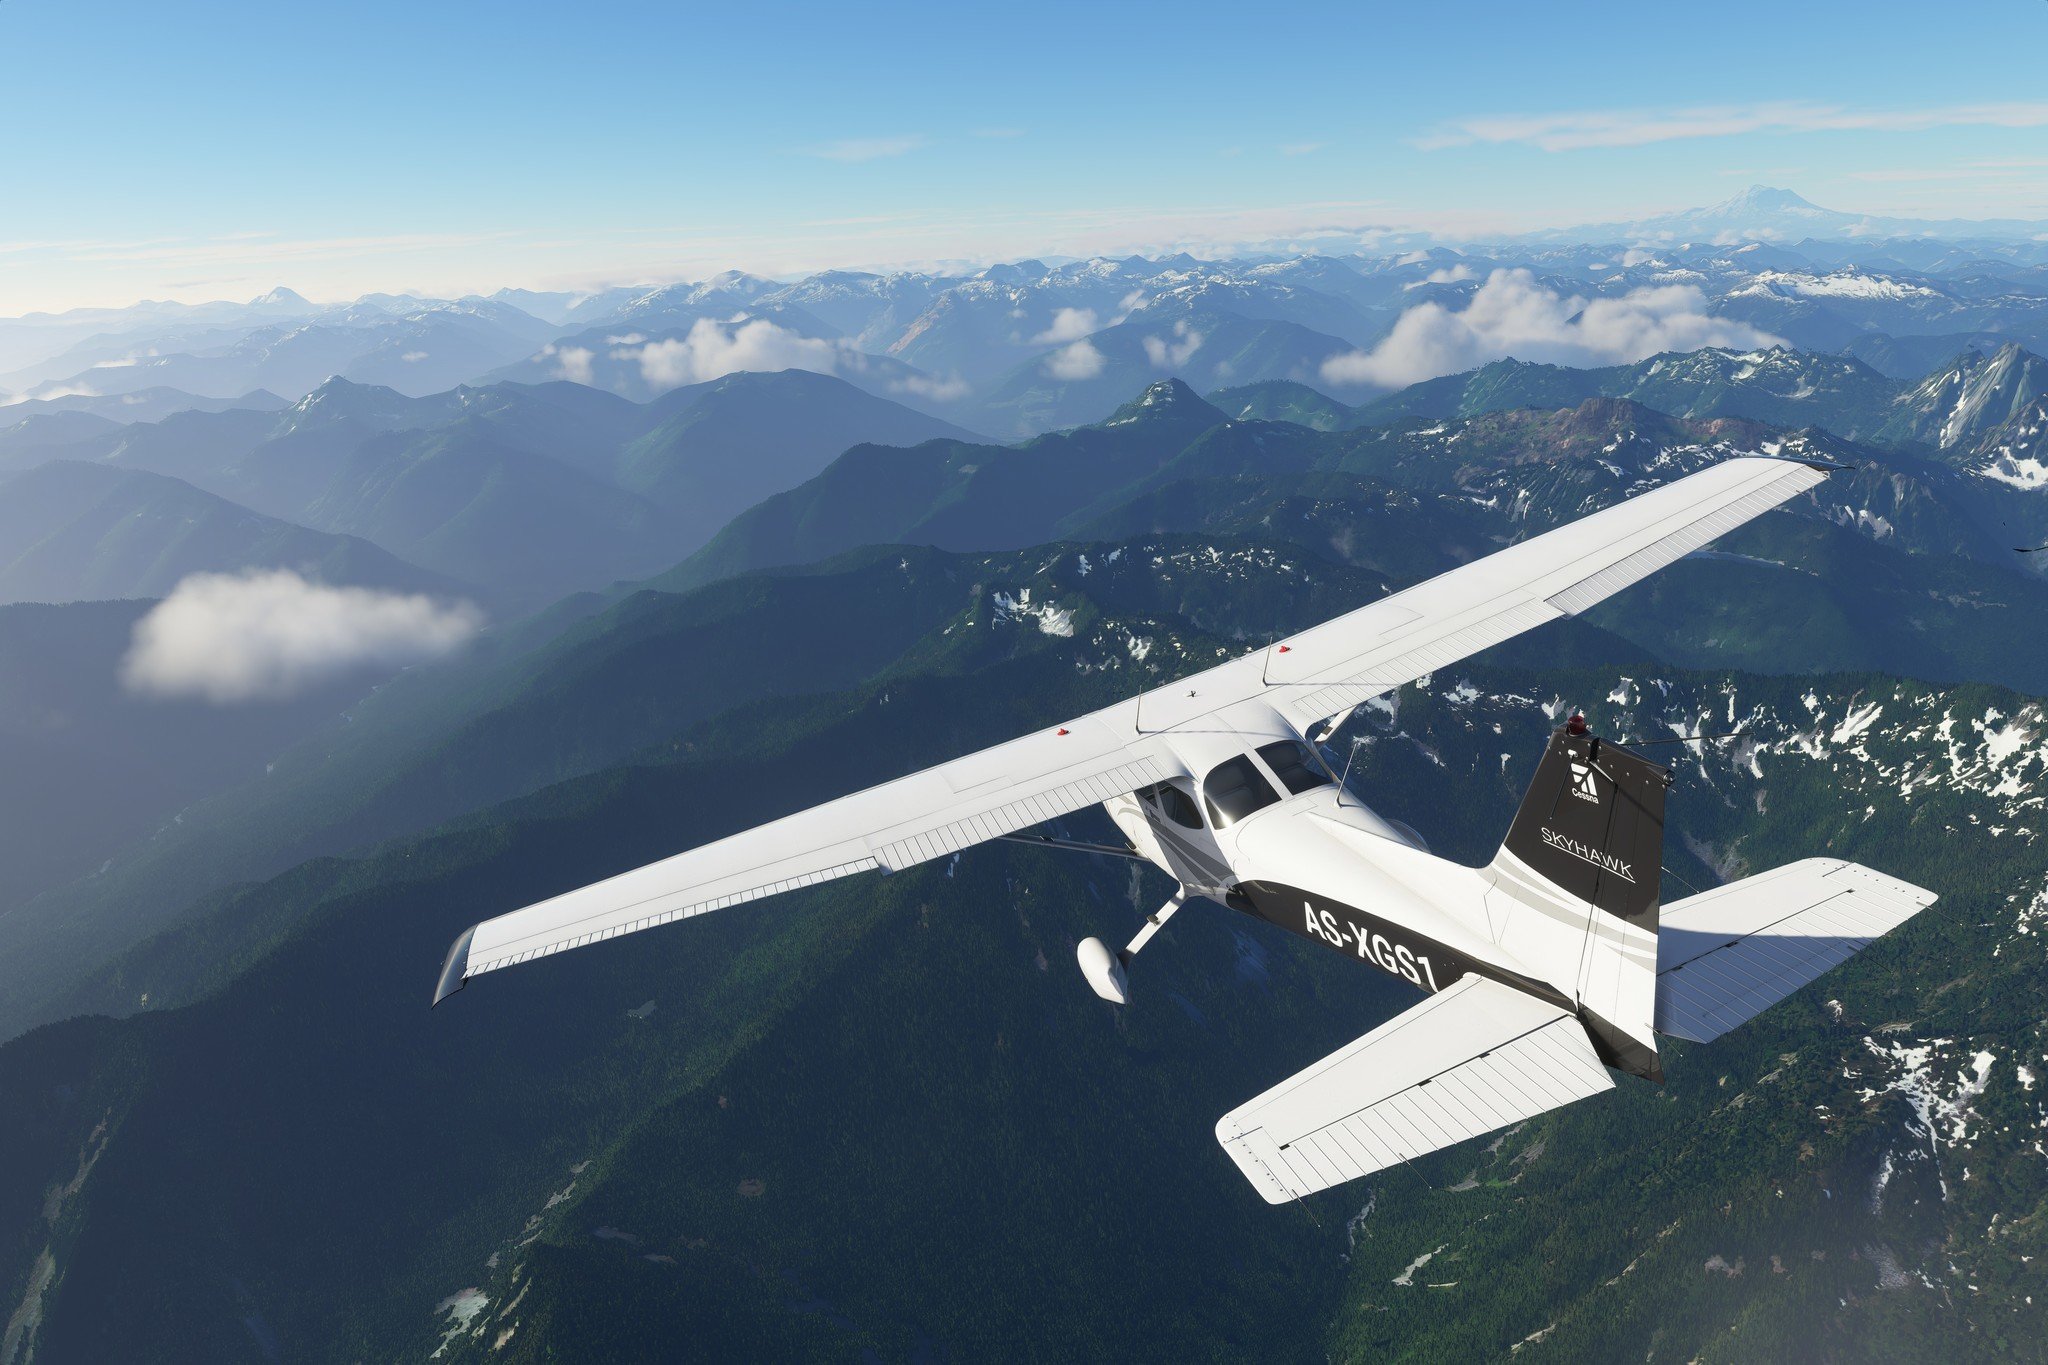 Microsoft Flight Simulator - The next generation of one of the